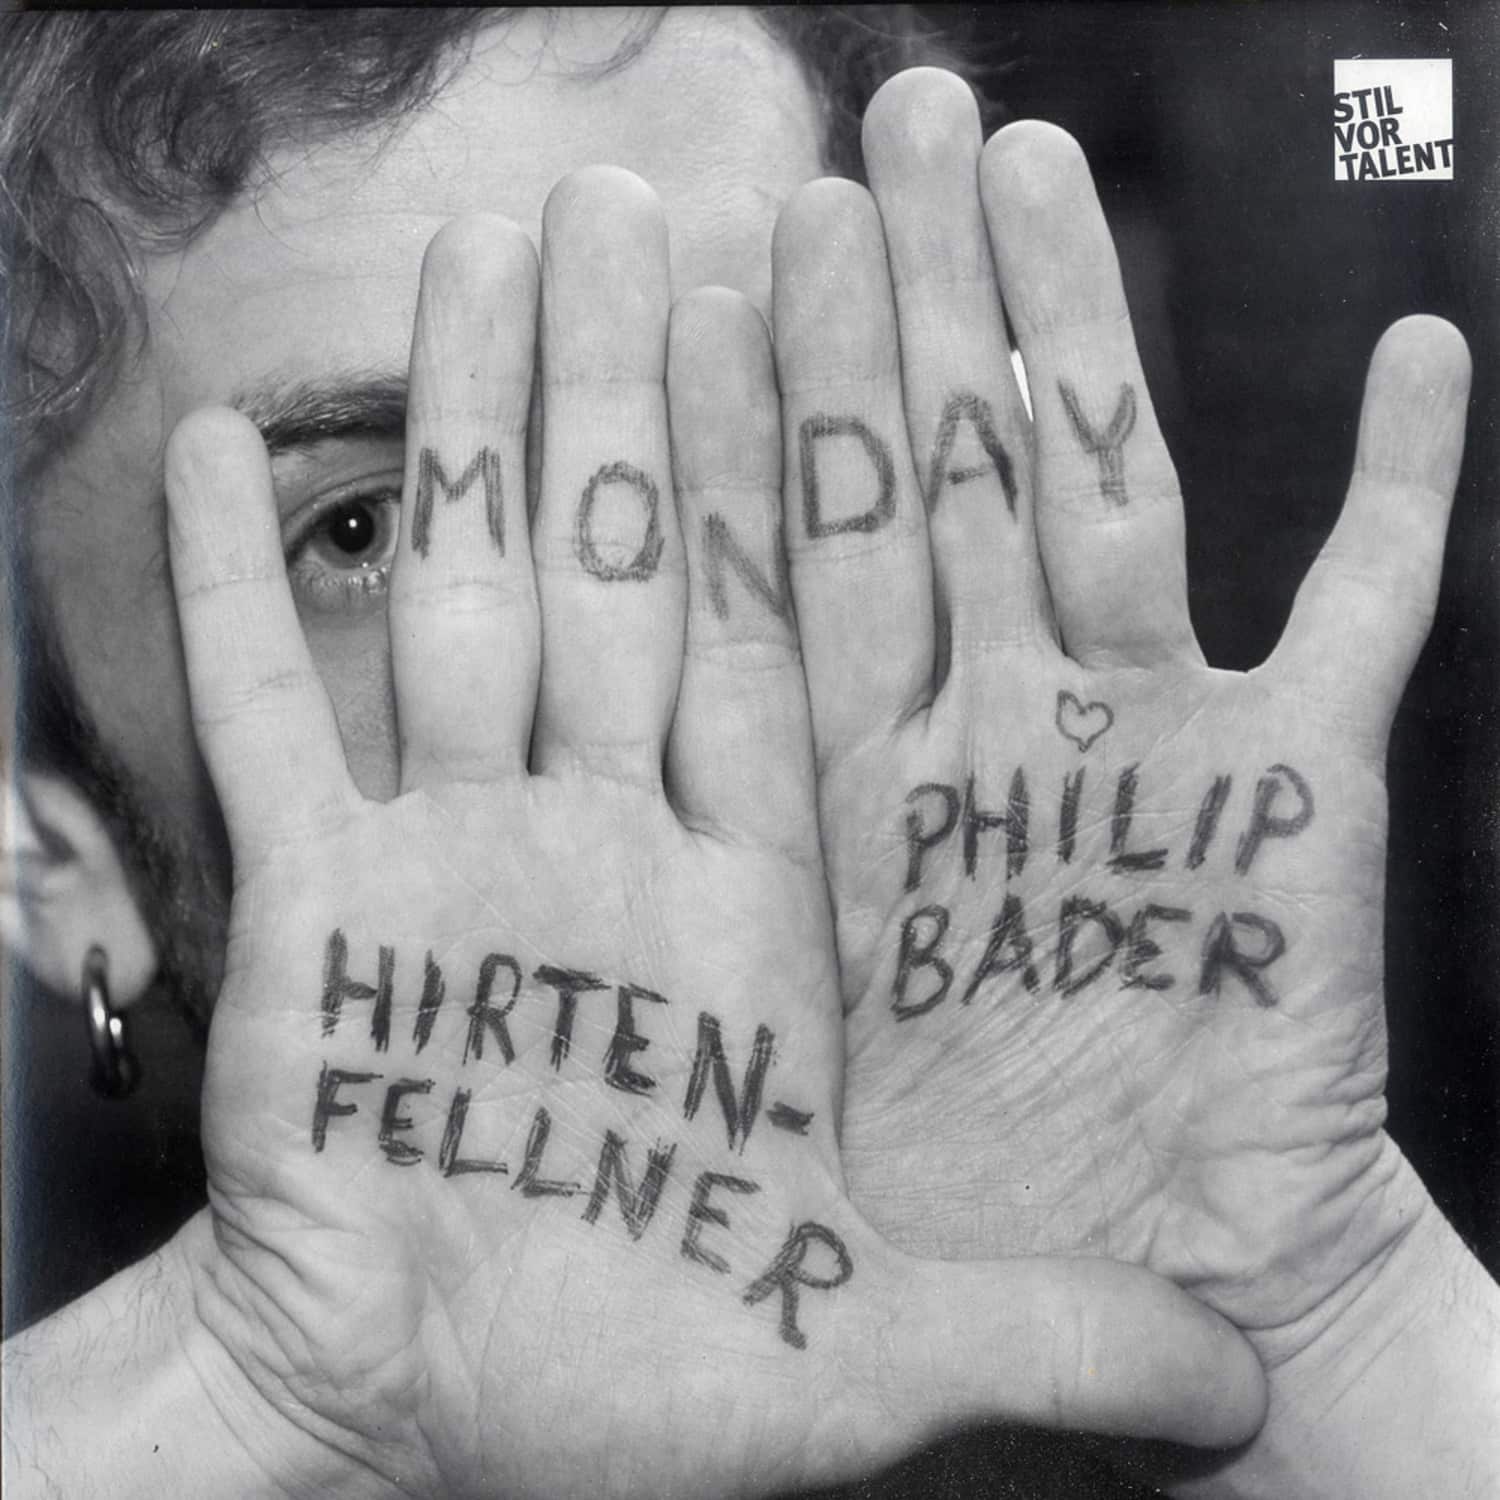 Hirtenfellner & Philip Bader - MONDAY EP